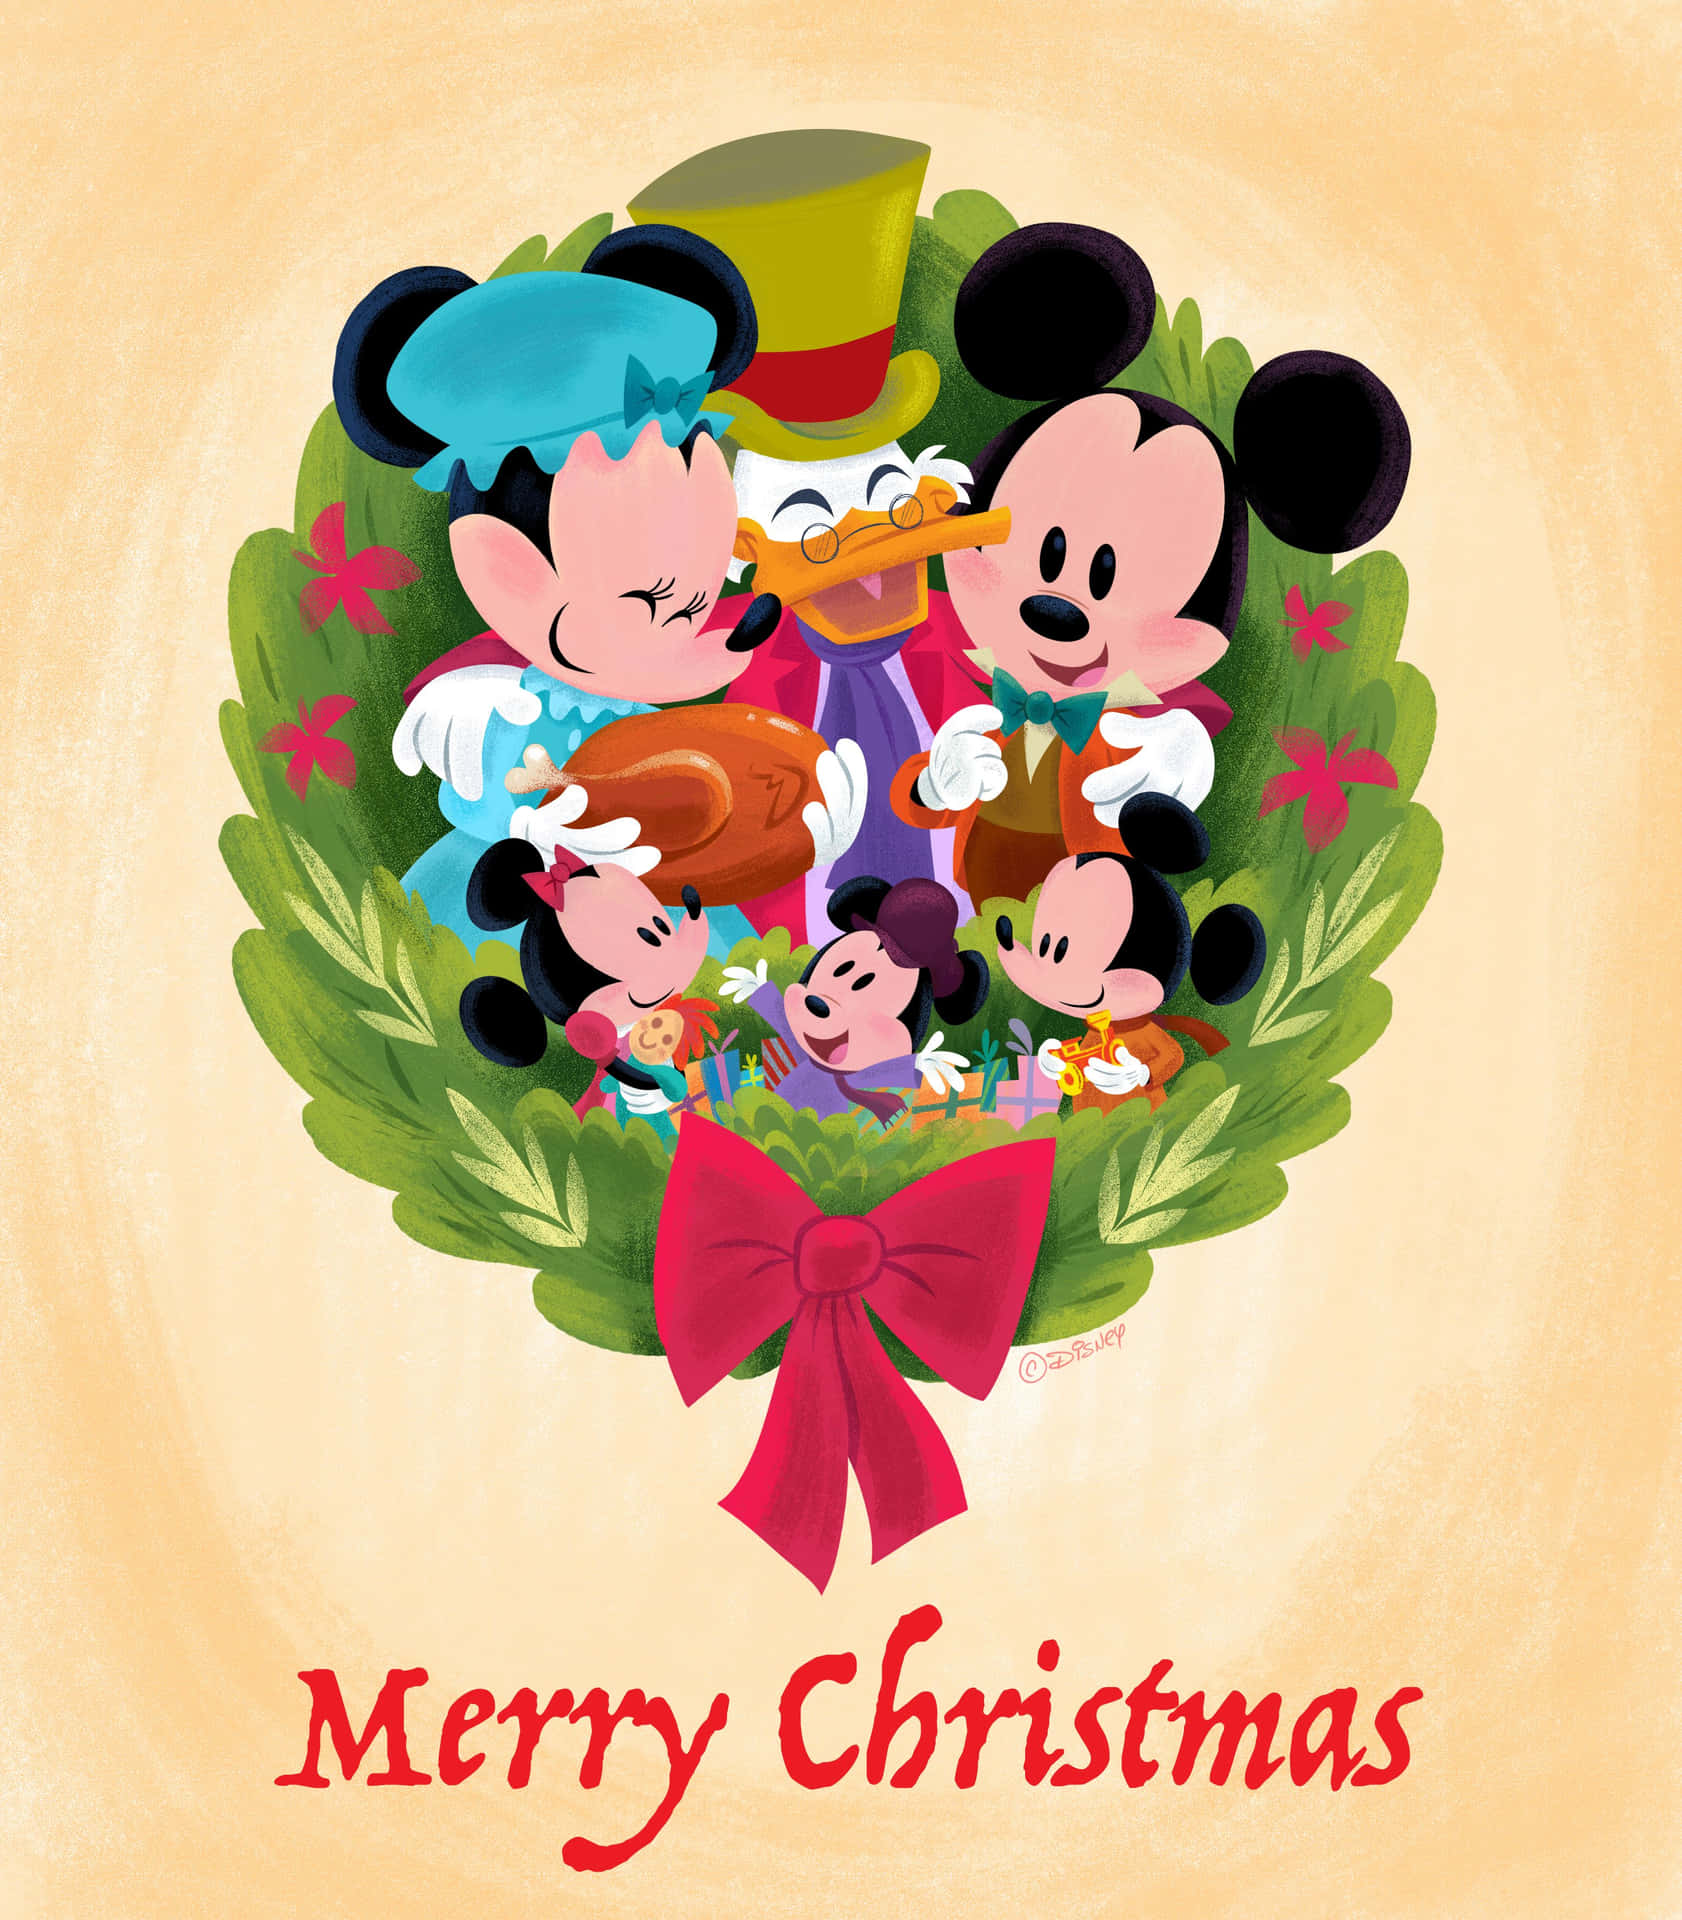 "Make magical memories this Christmas with Disney!"